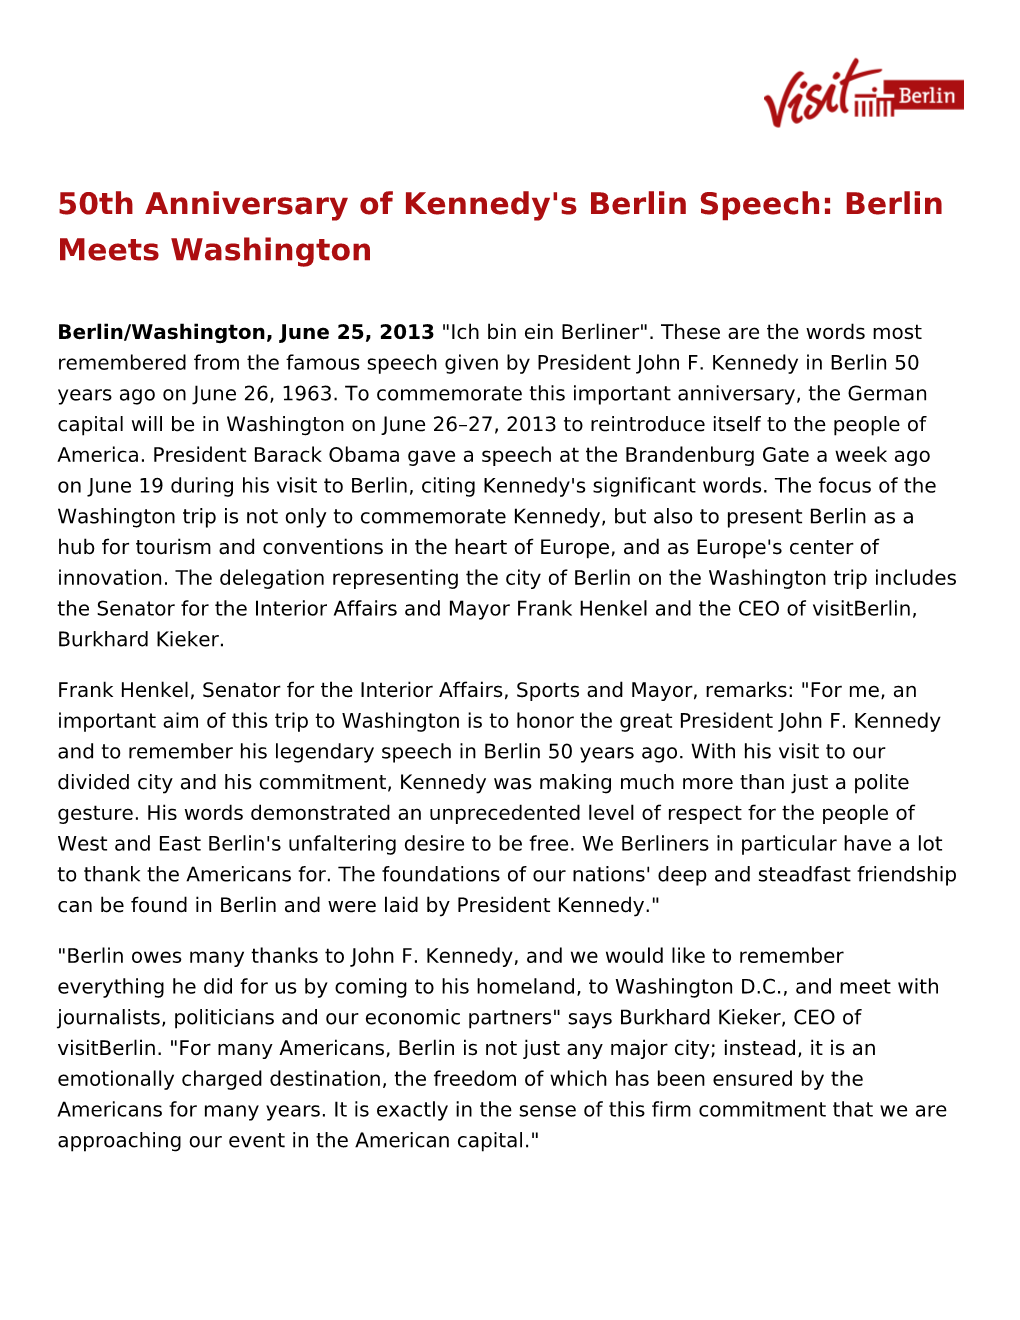 50Th Anniversary of Kennedy's Berlin Speech: Berlin Meets Washington